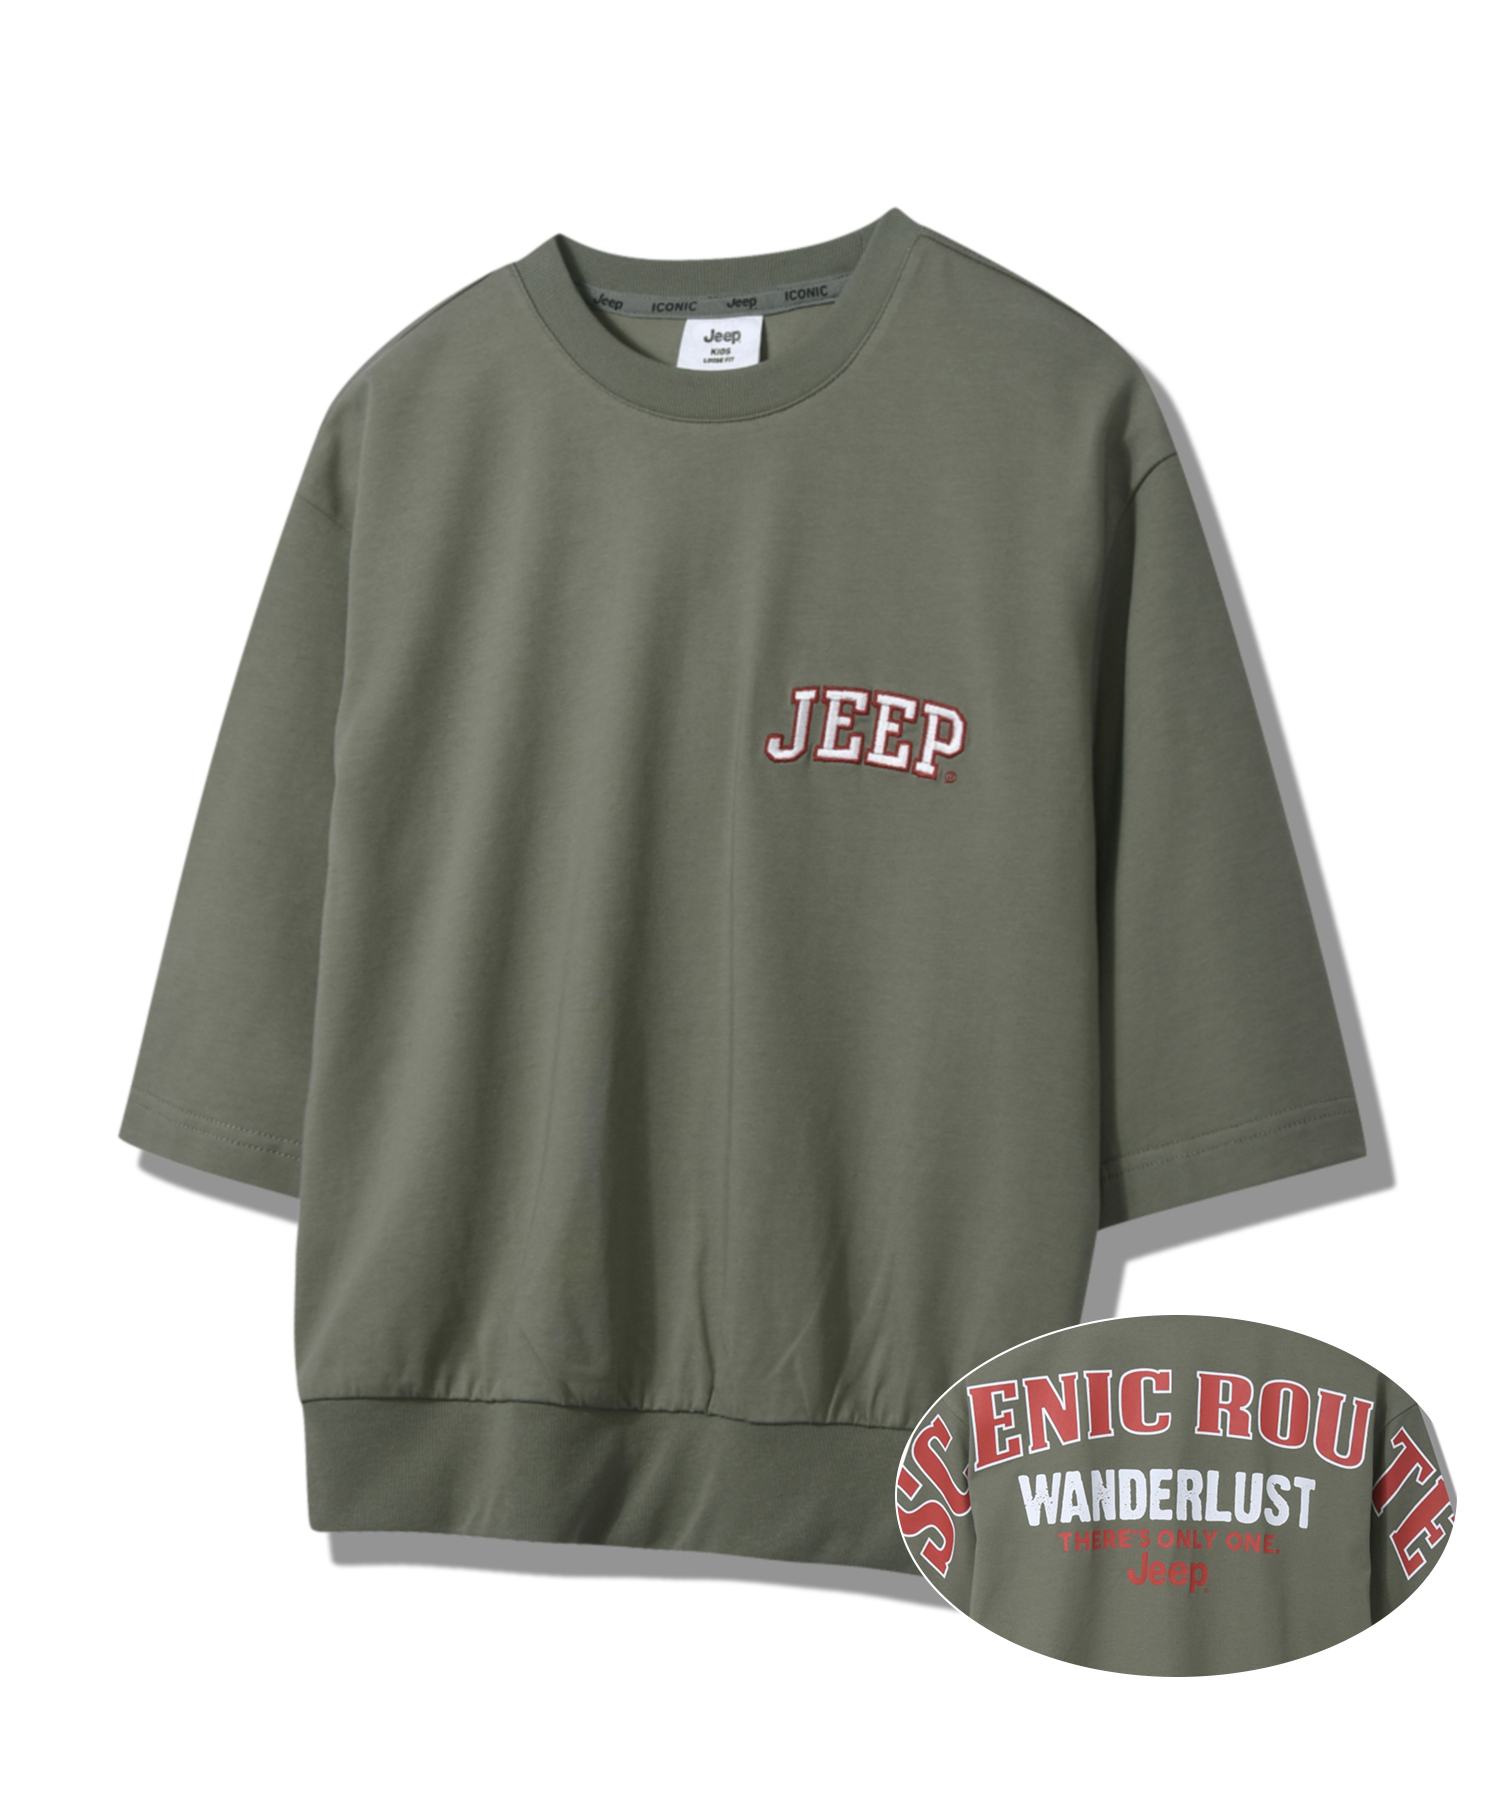 [KIDS] Jeep Scenic Route T-Shirt(KP2TSU011LK)